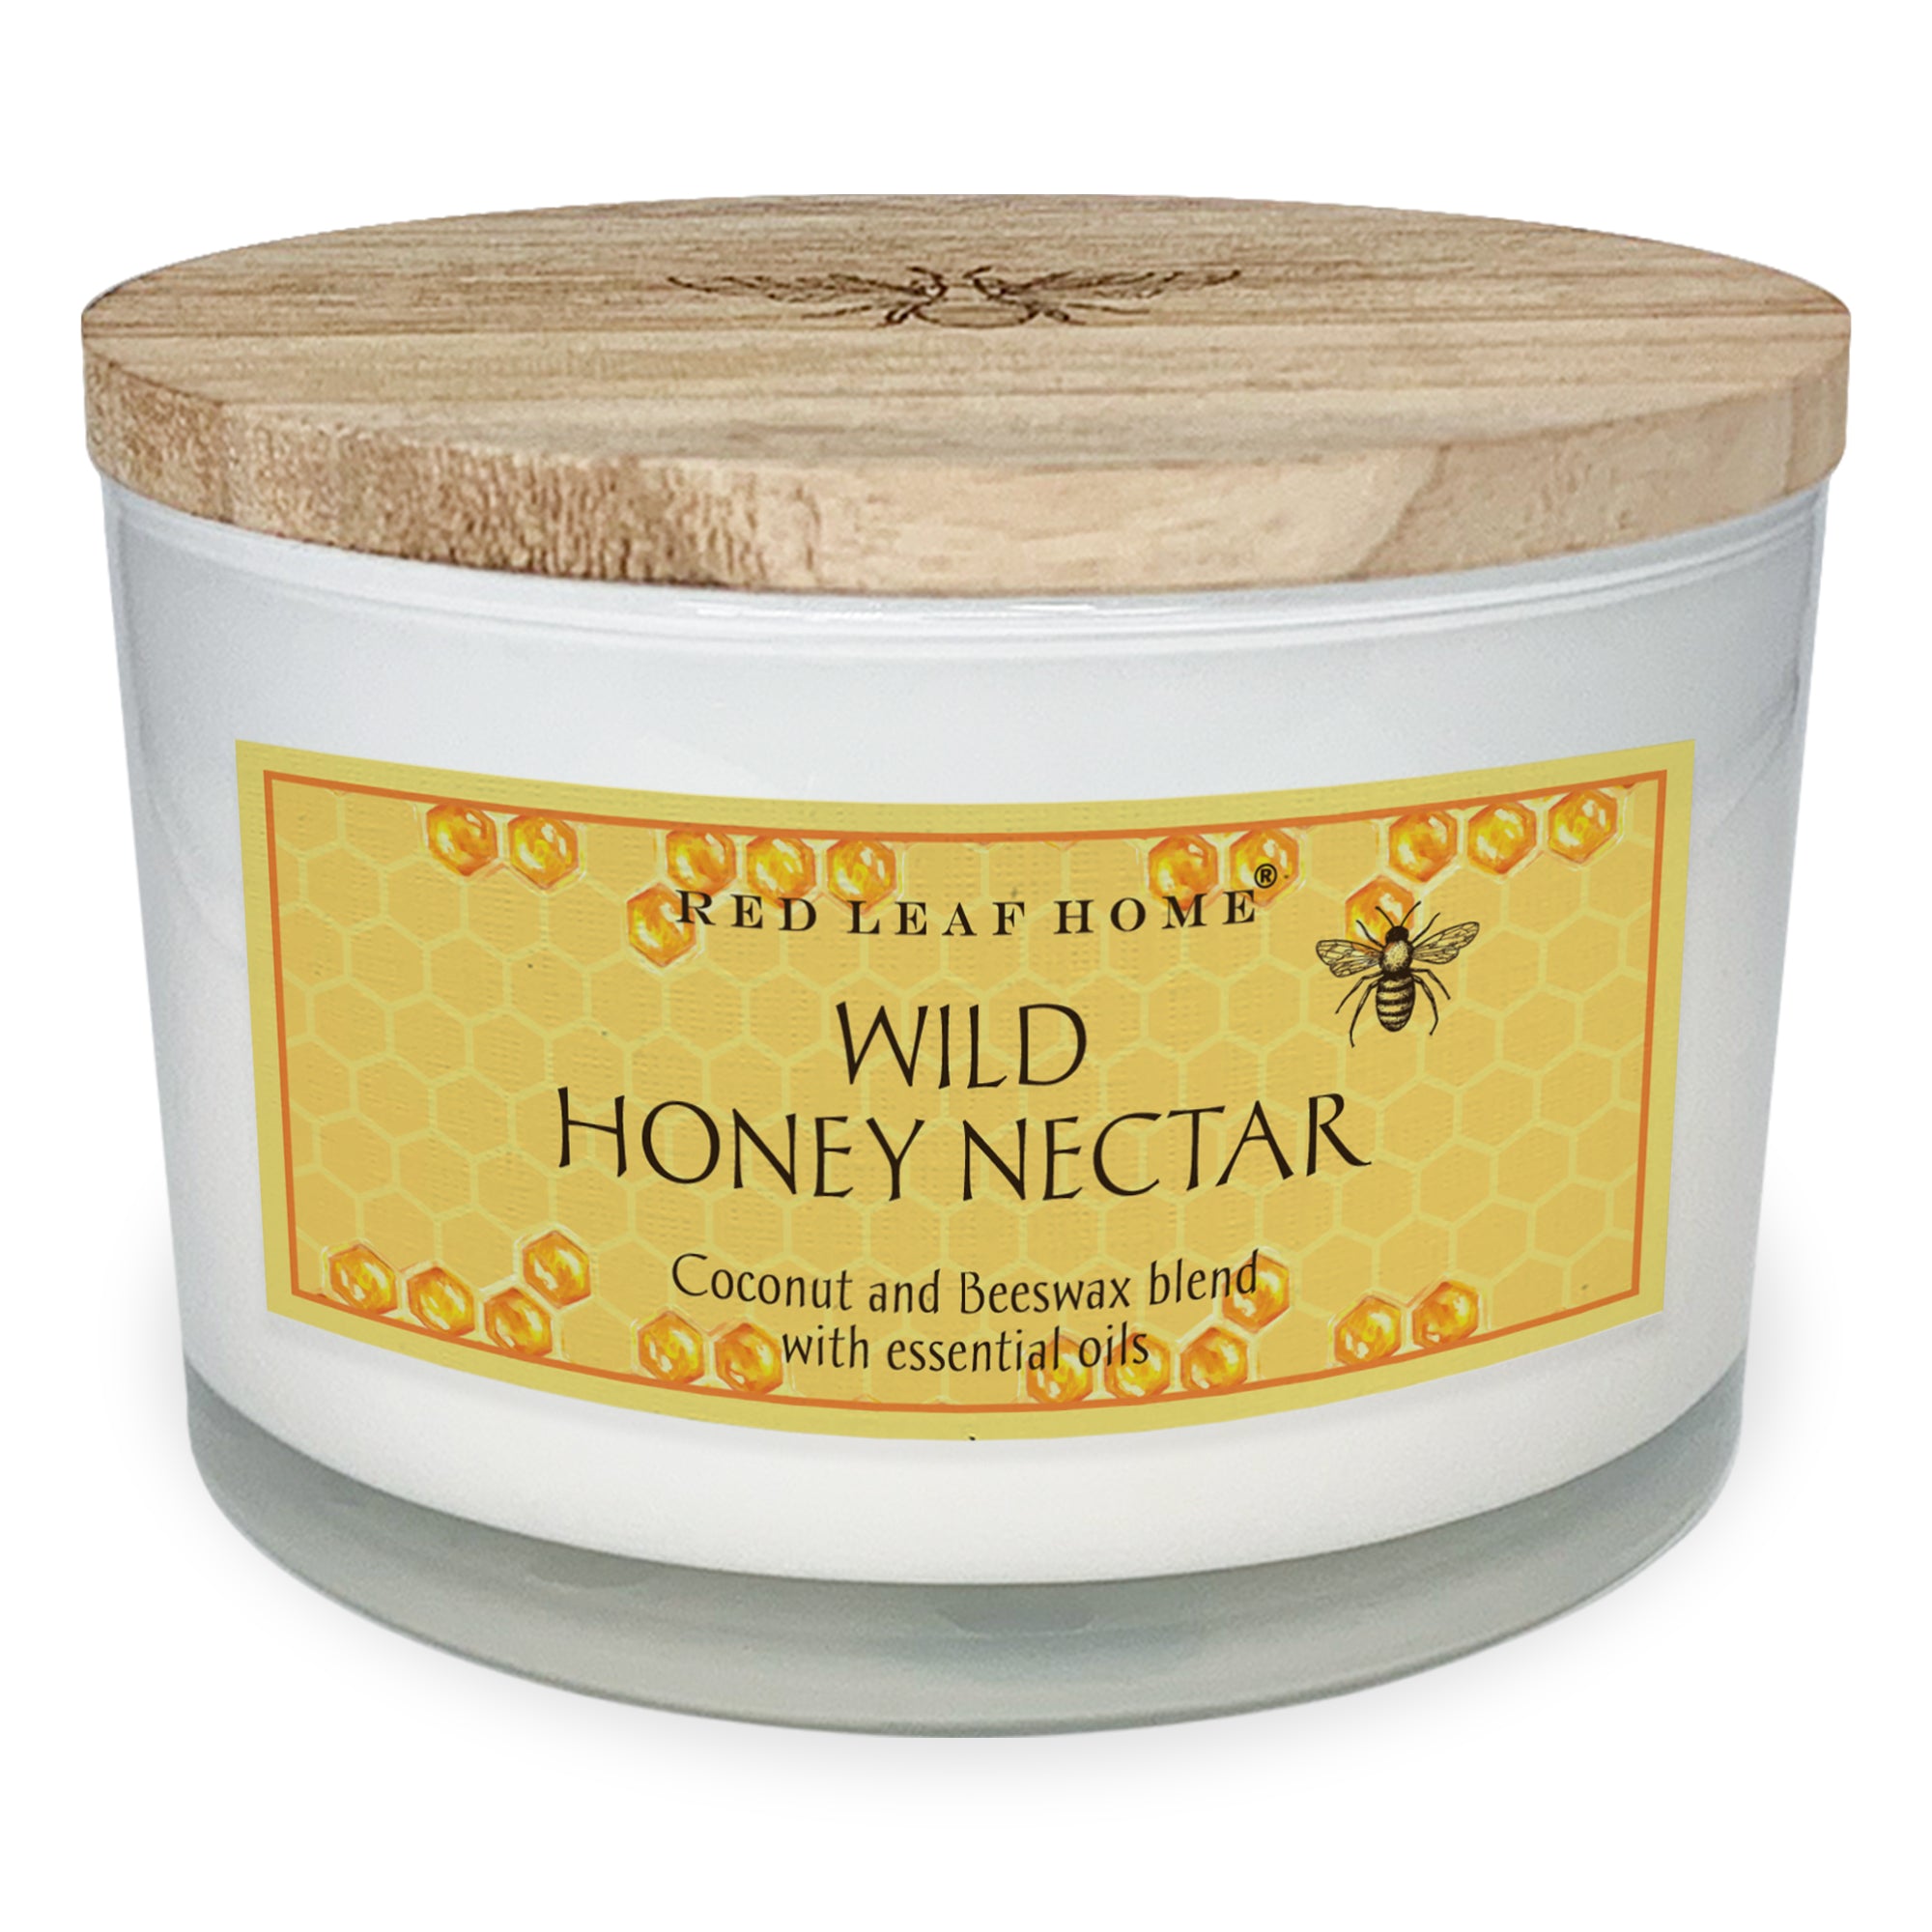 Wild Honey Nectar